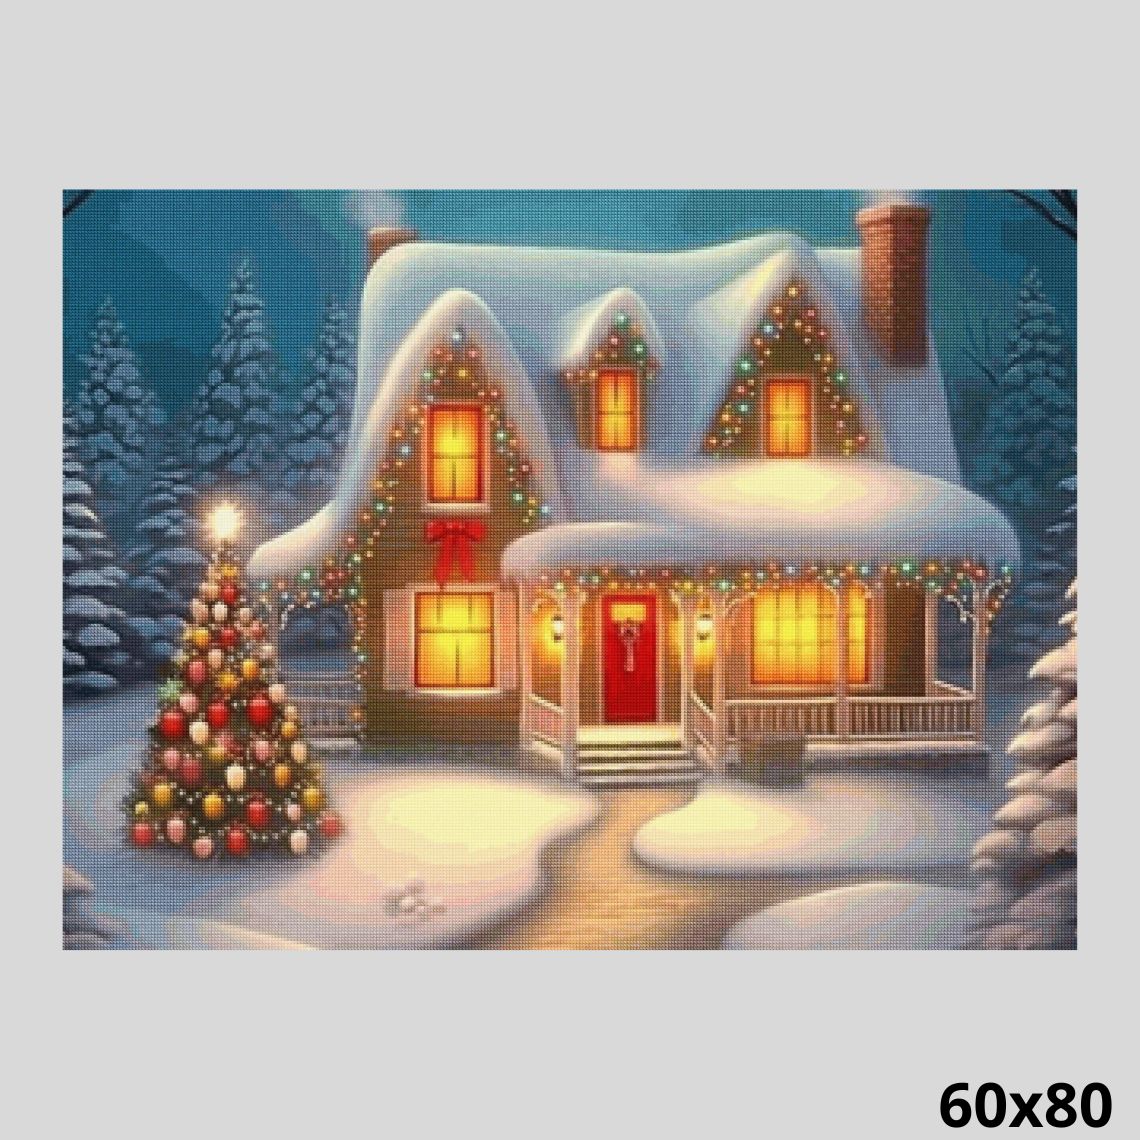 Shining Christmas Lights around the House 60x80 - Diamond Art